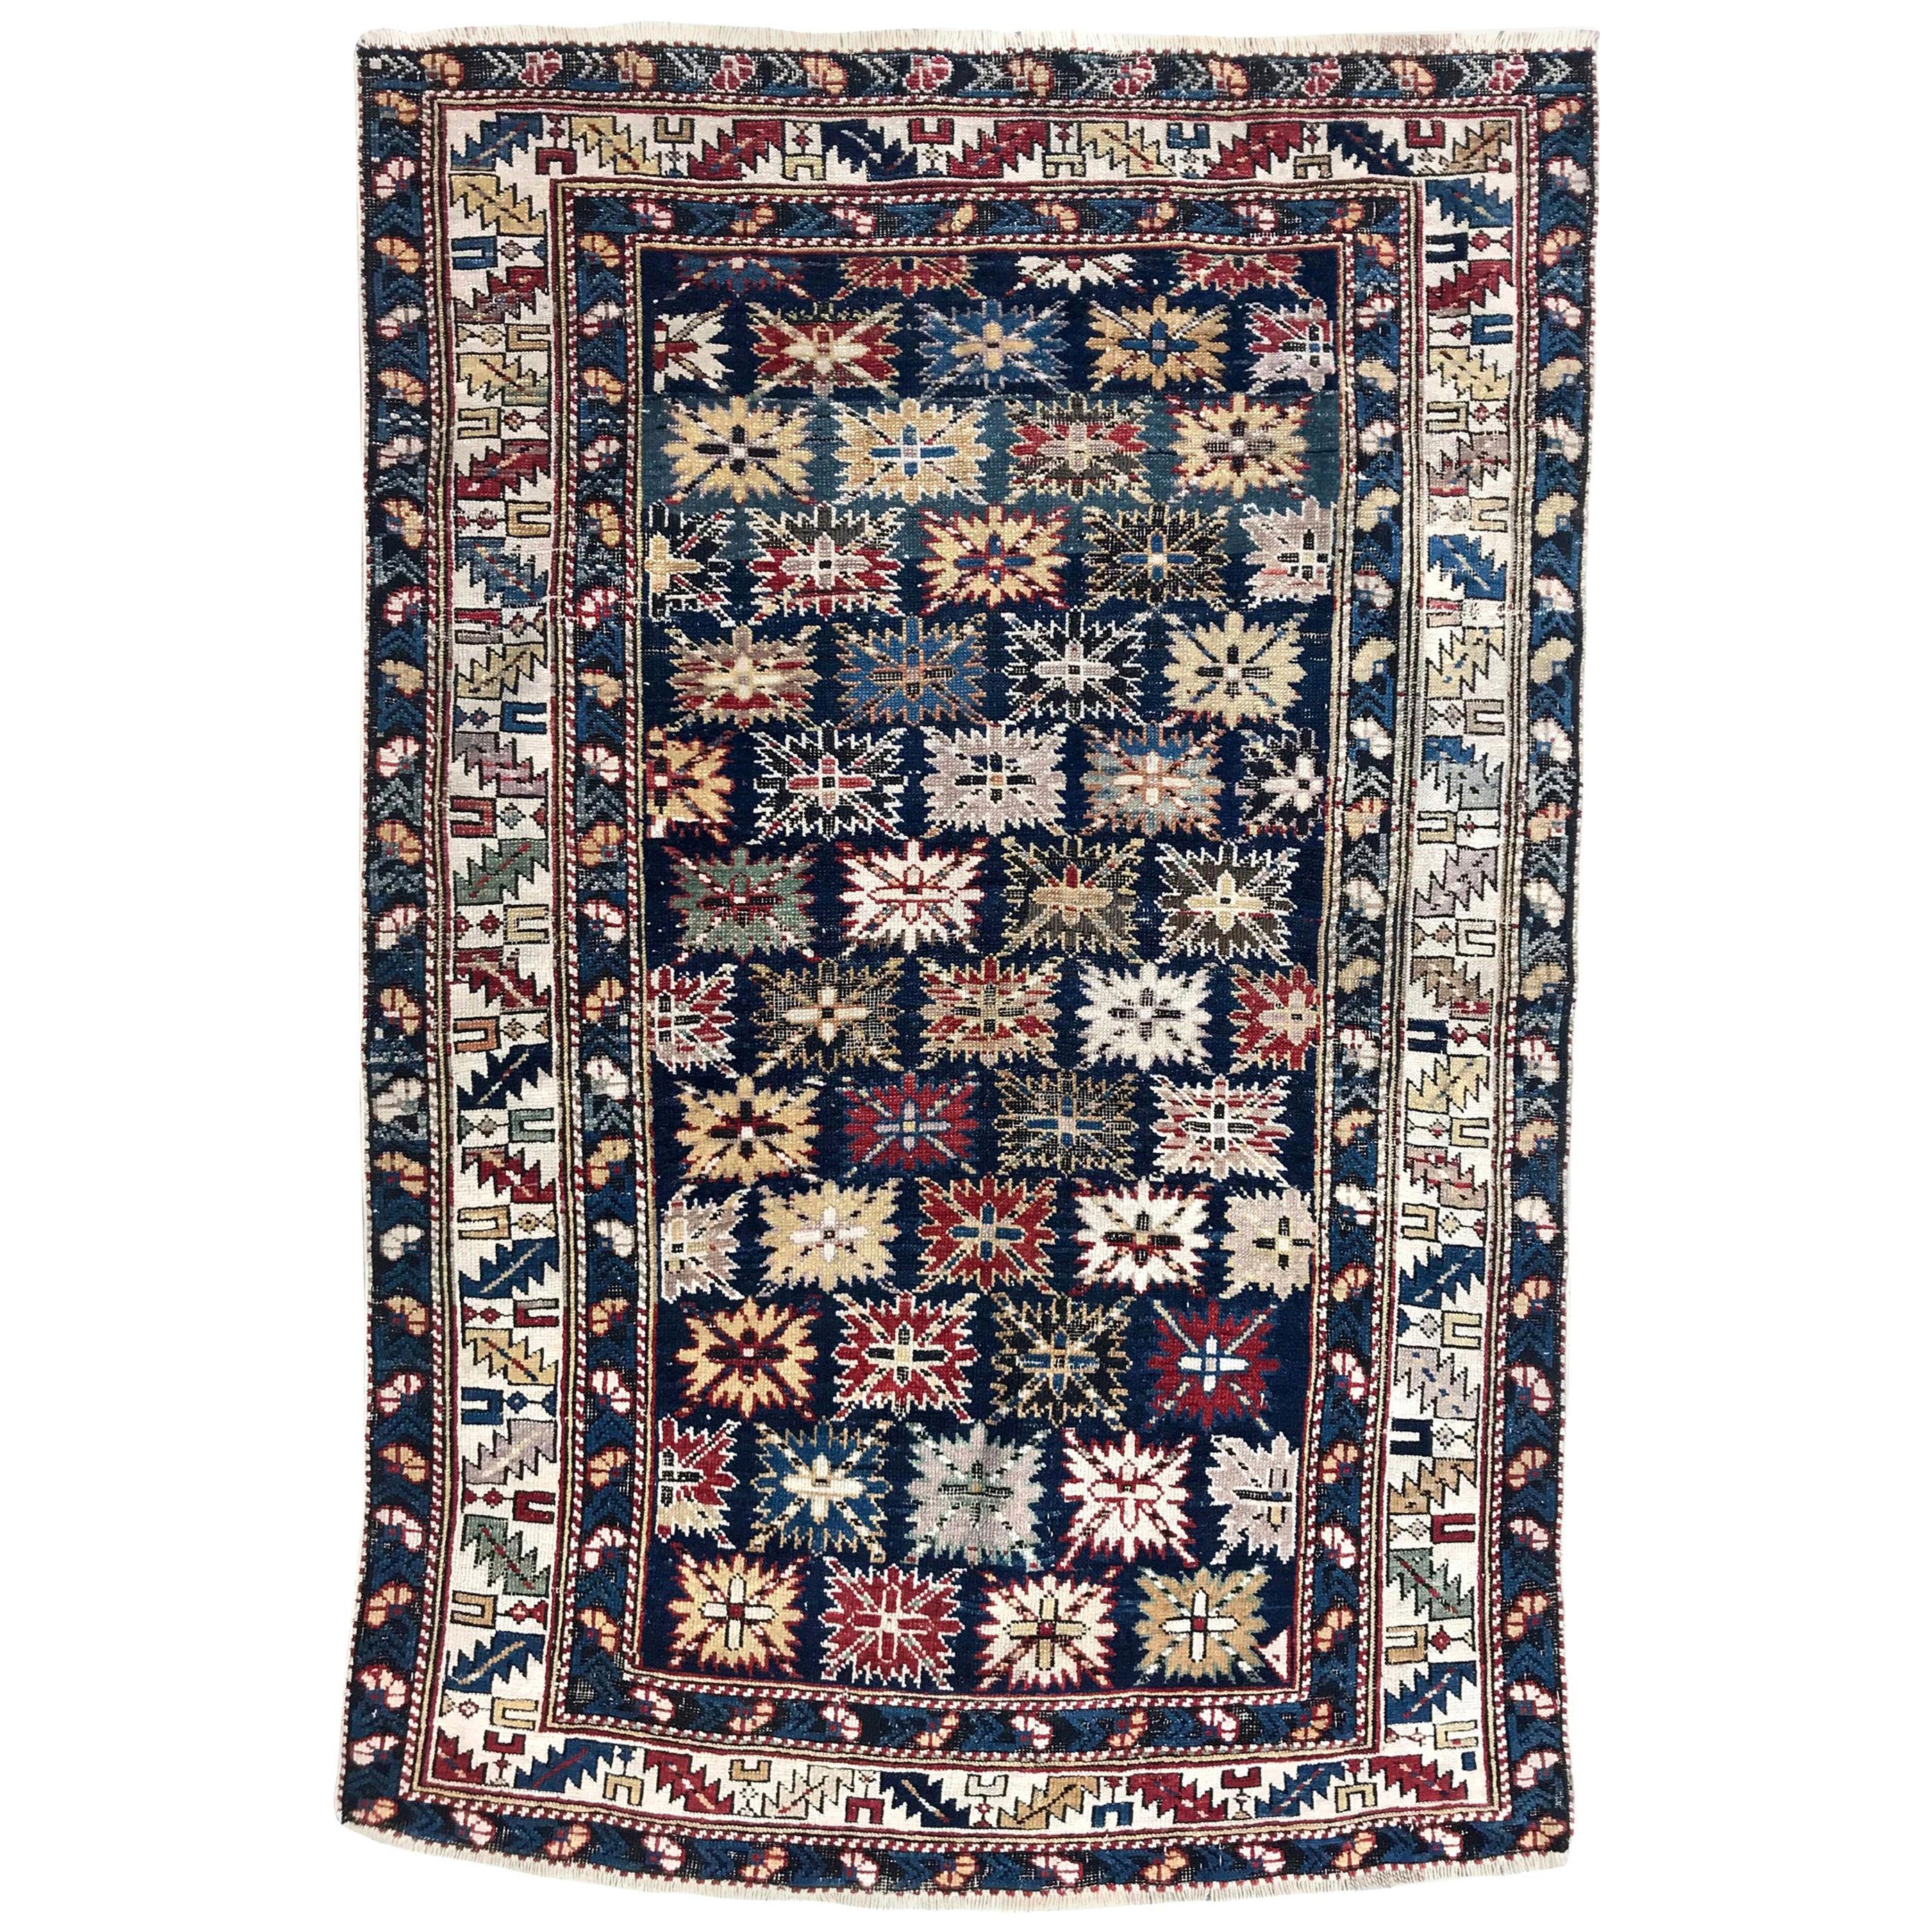 Bobyrug's Antiker Kaukasischer Chirwan Kouba Teppich aus dem 19.